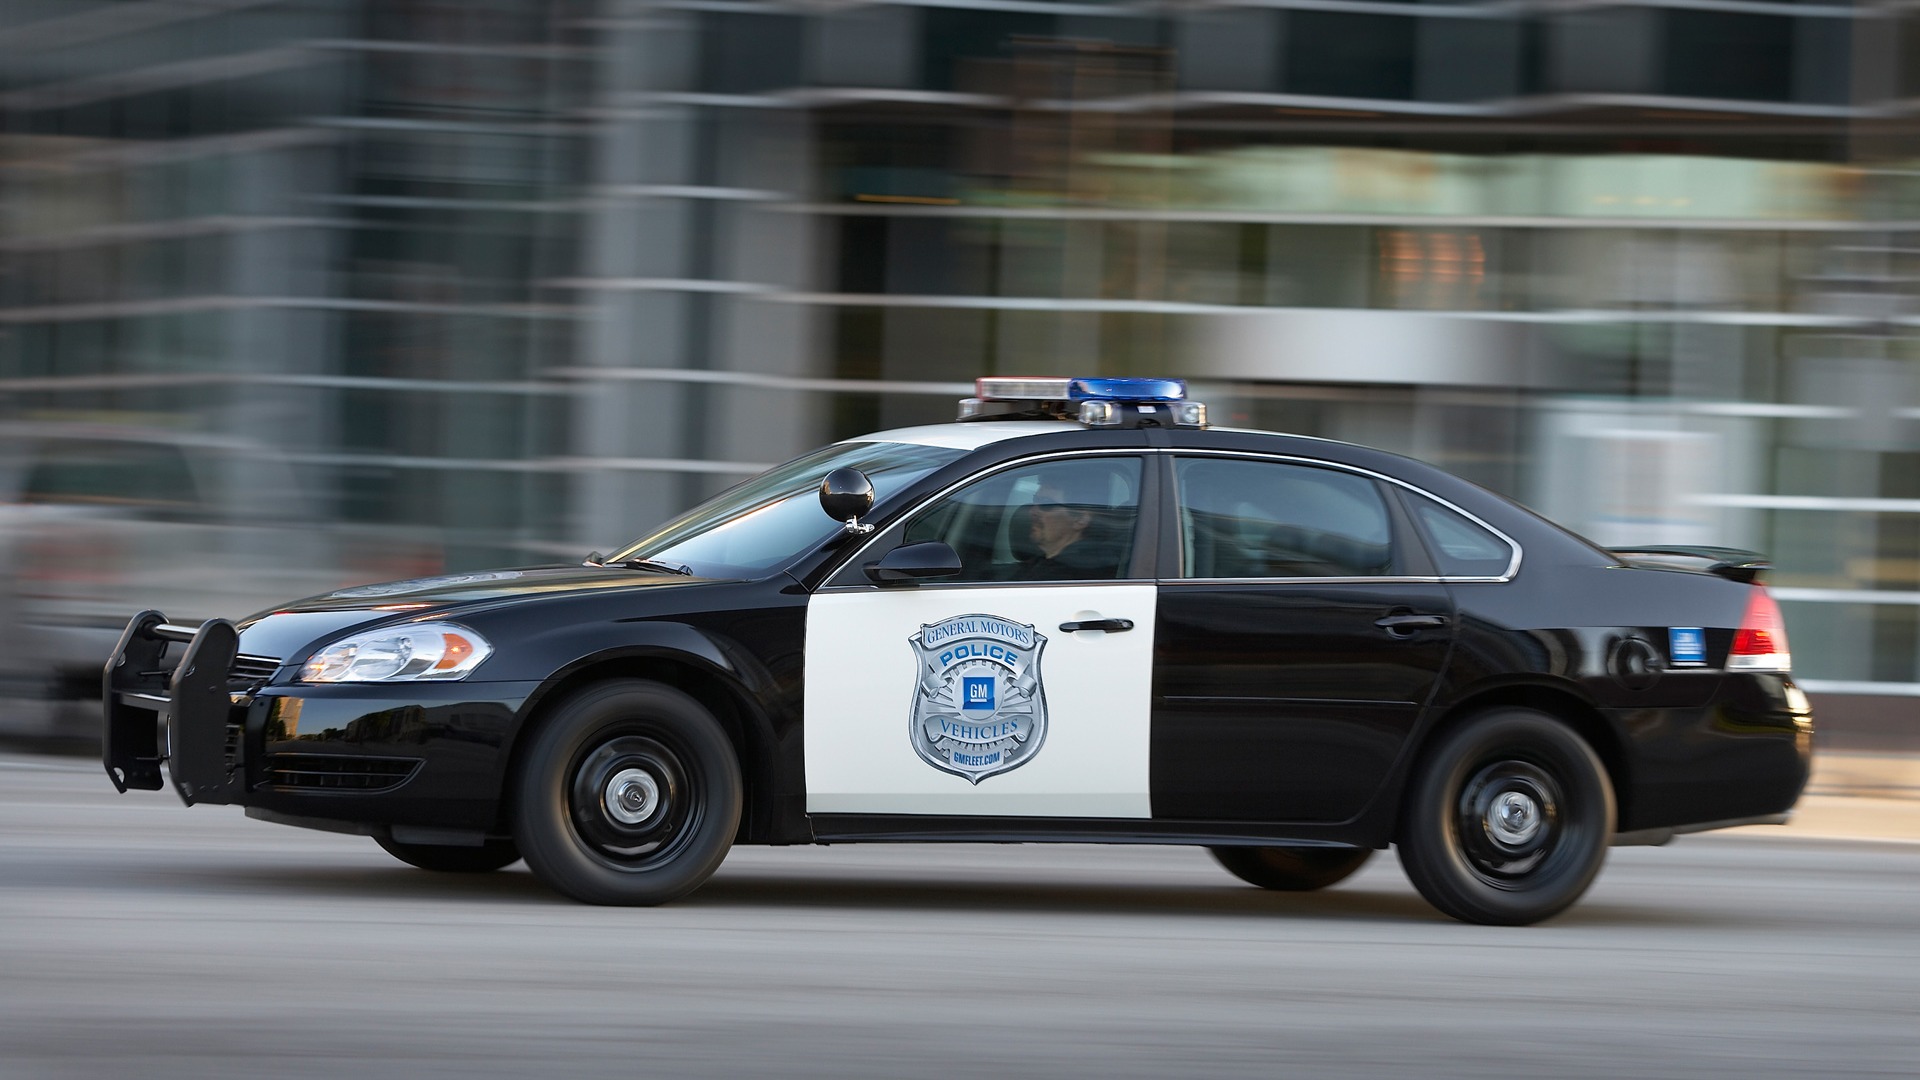 Chevrolet Impala Police Vehicle - 2011 雪佛兰5 - 1920x1080